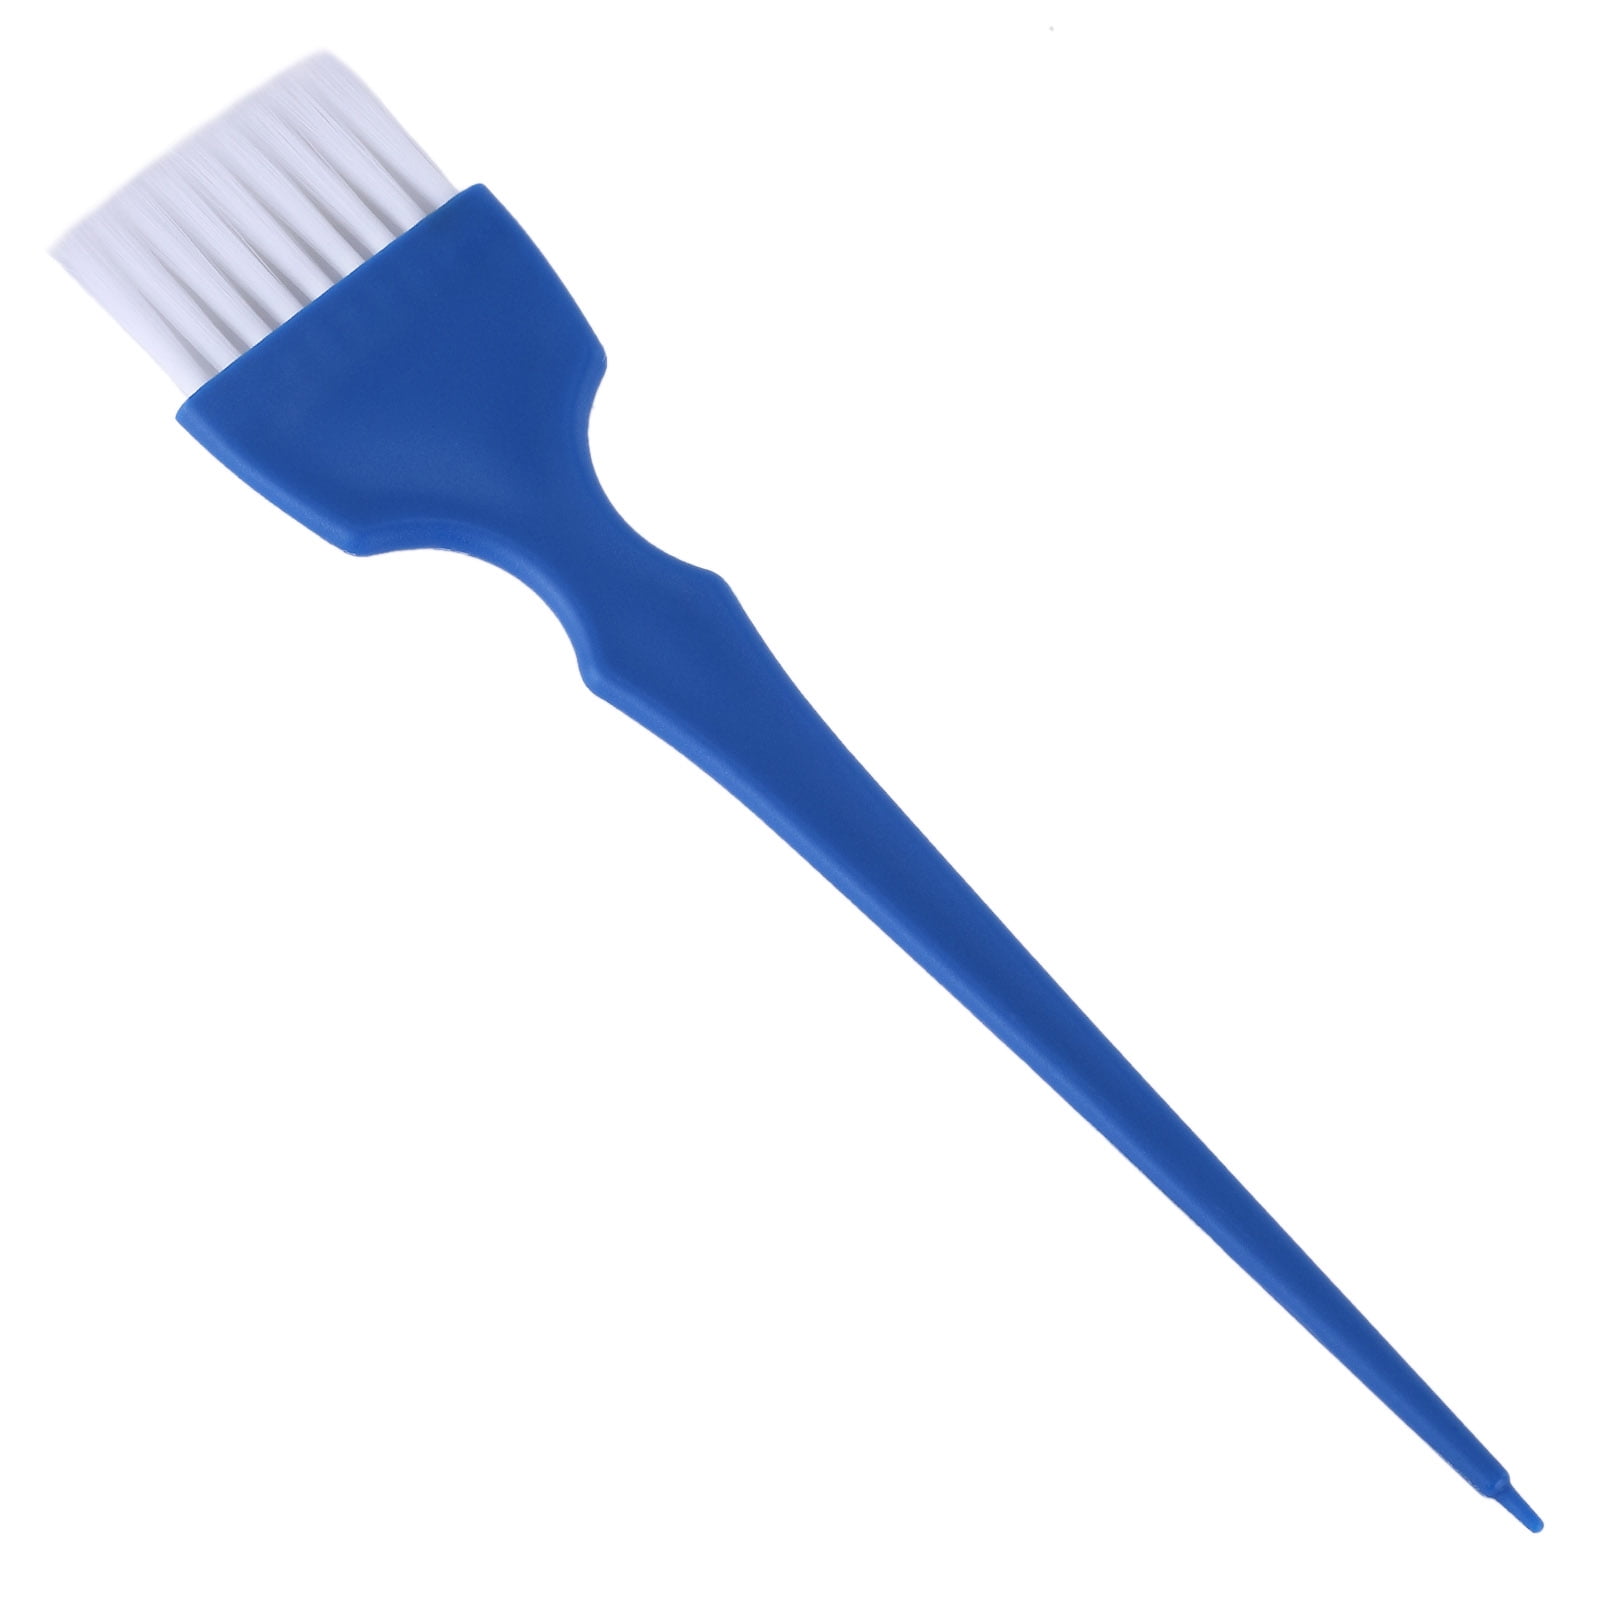 Tomshine 1 pcs Hair Dye Brush Coloring Combs Barber Tools Color Tint  Applicator Highlight Dyeing Brush Kit Salon Hair Coloring Tool 